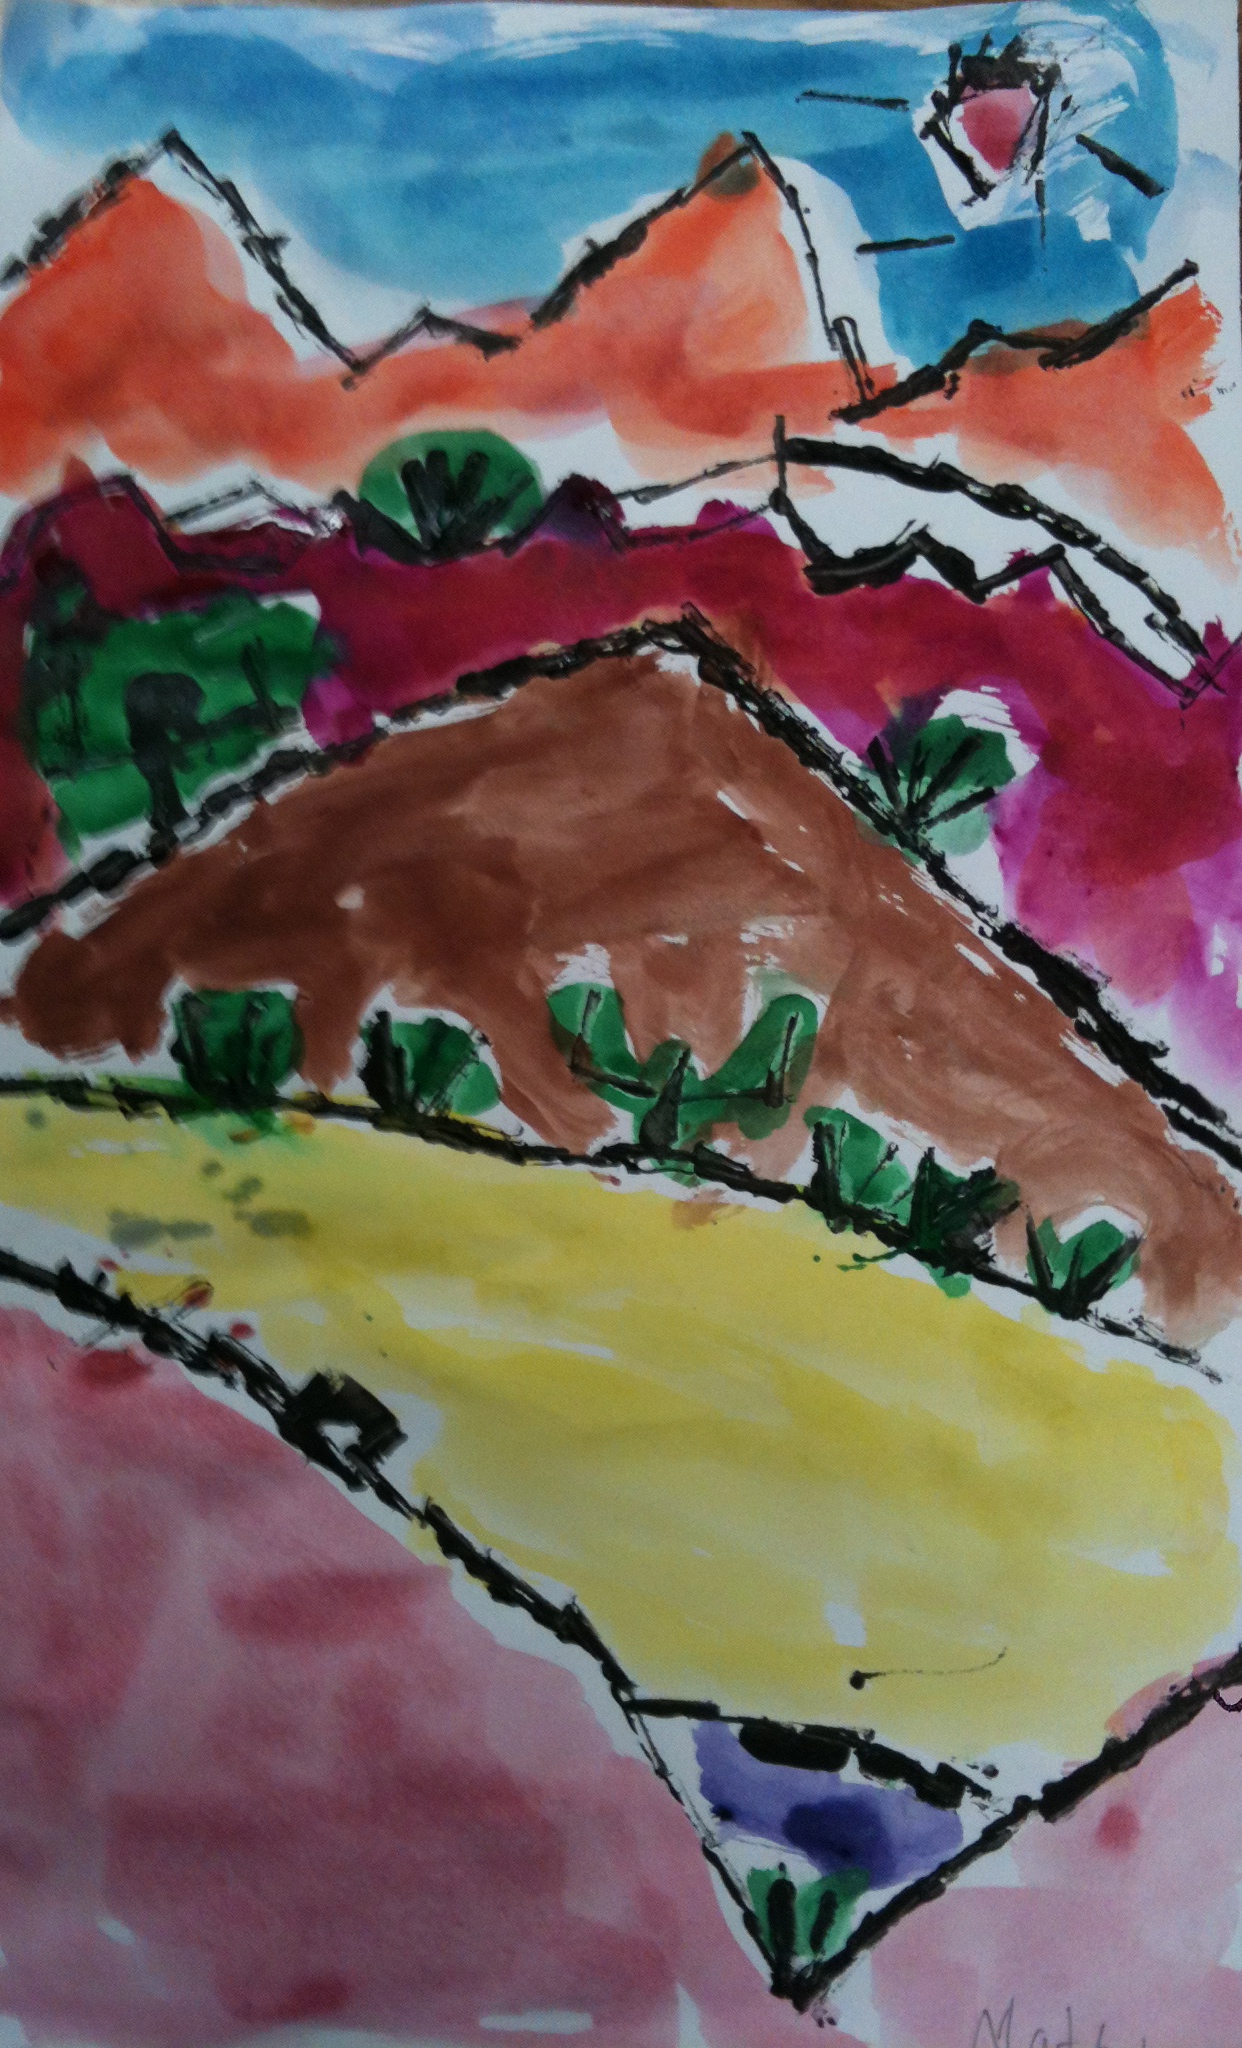 Digital Painting For Kids at Home: Desert Landscape with Kleki 